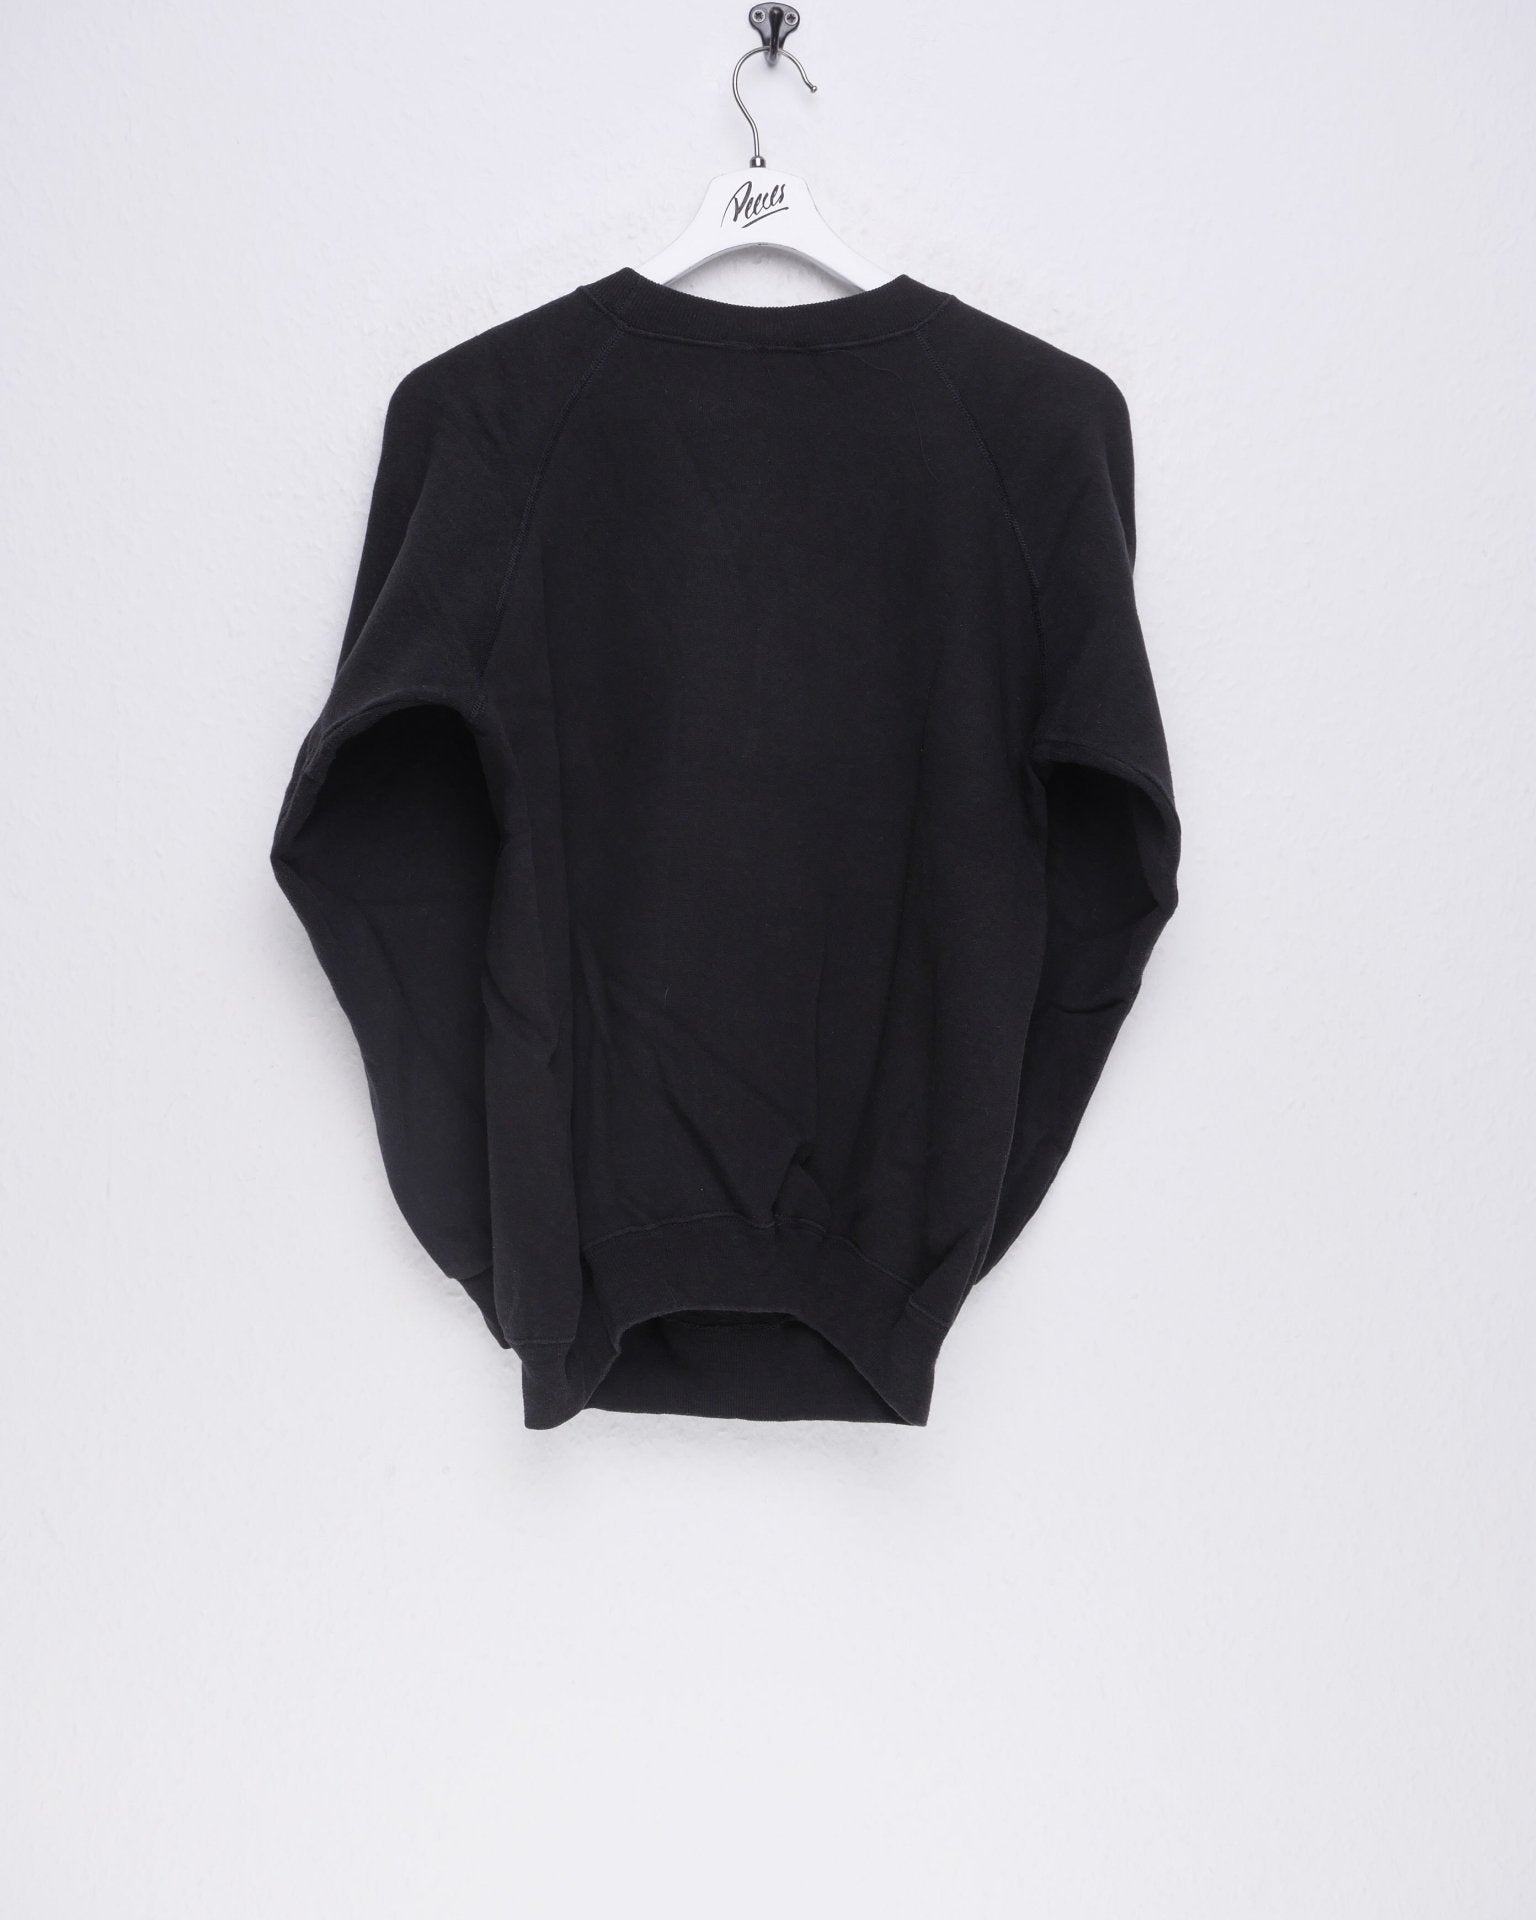 Arizona printed Graphic black Sweater - Peeces